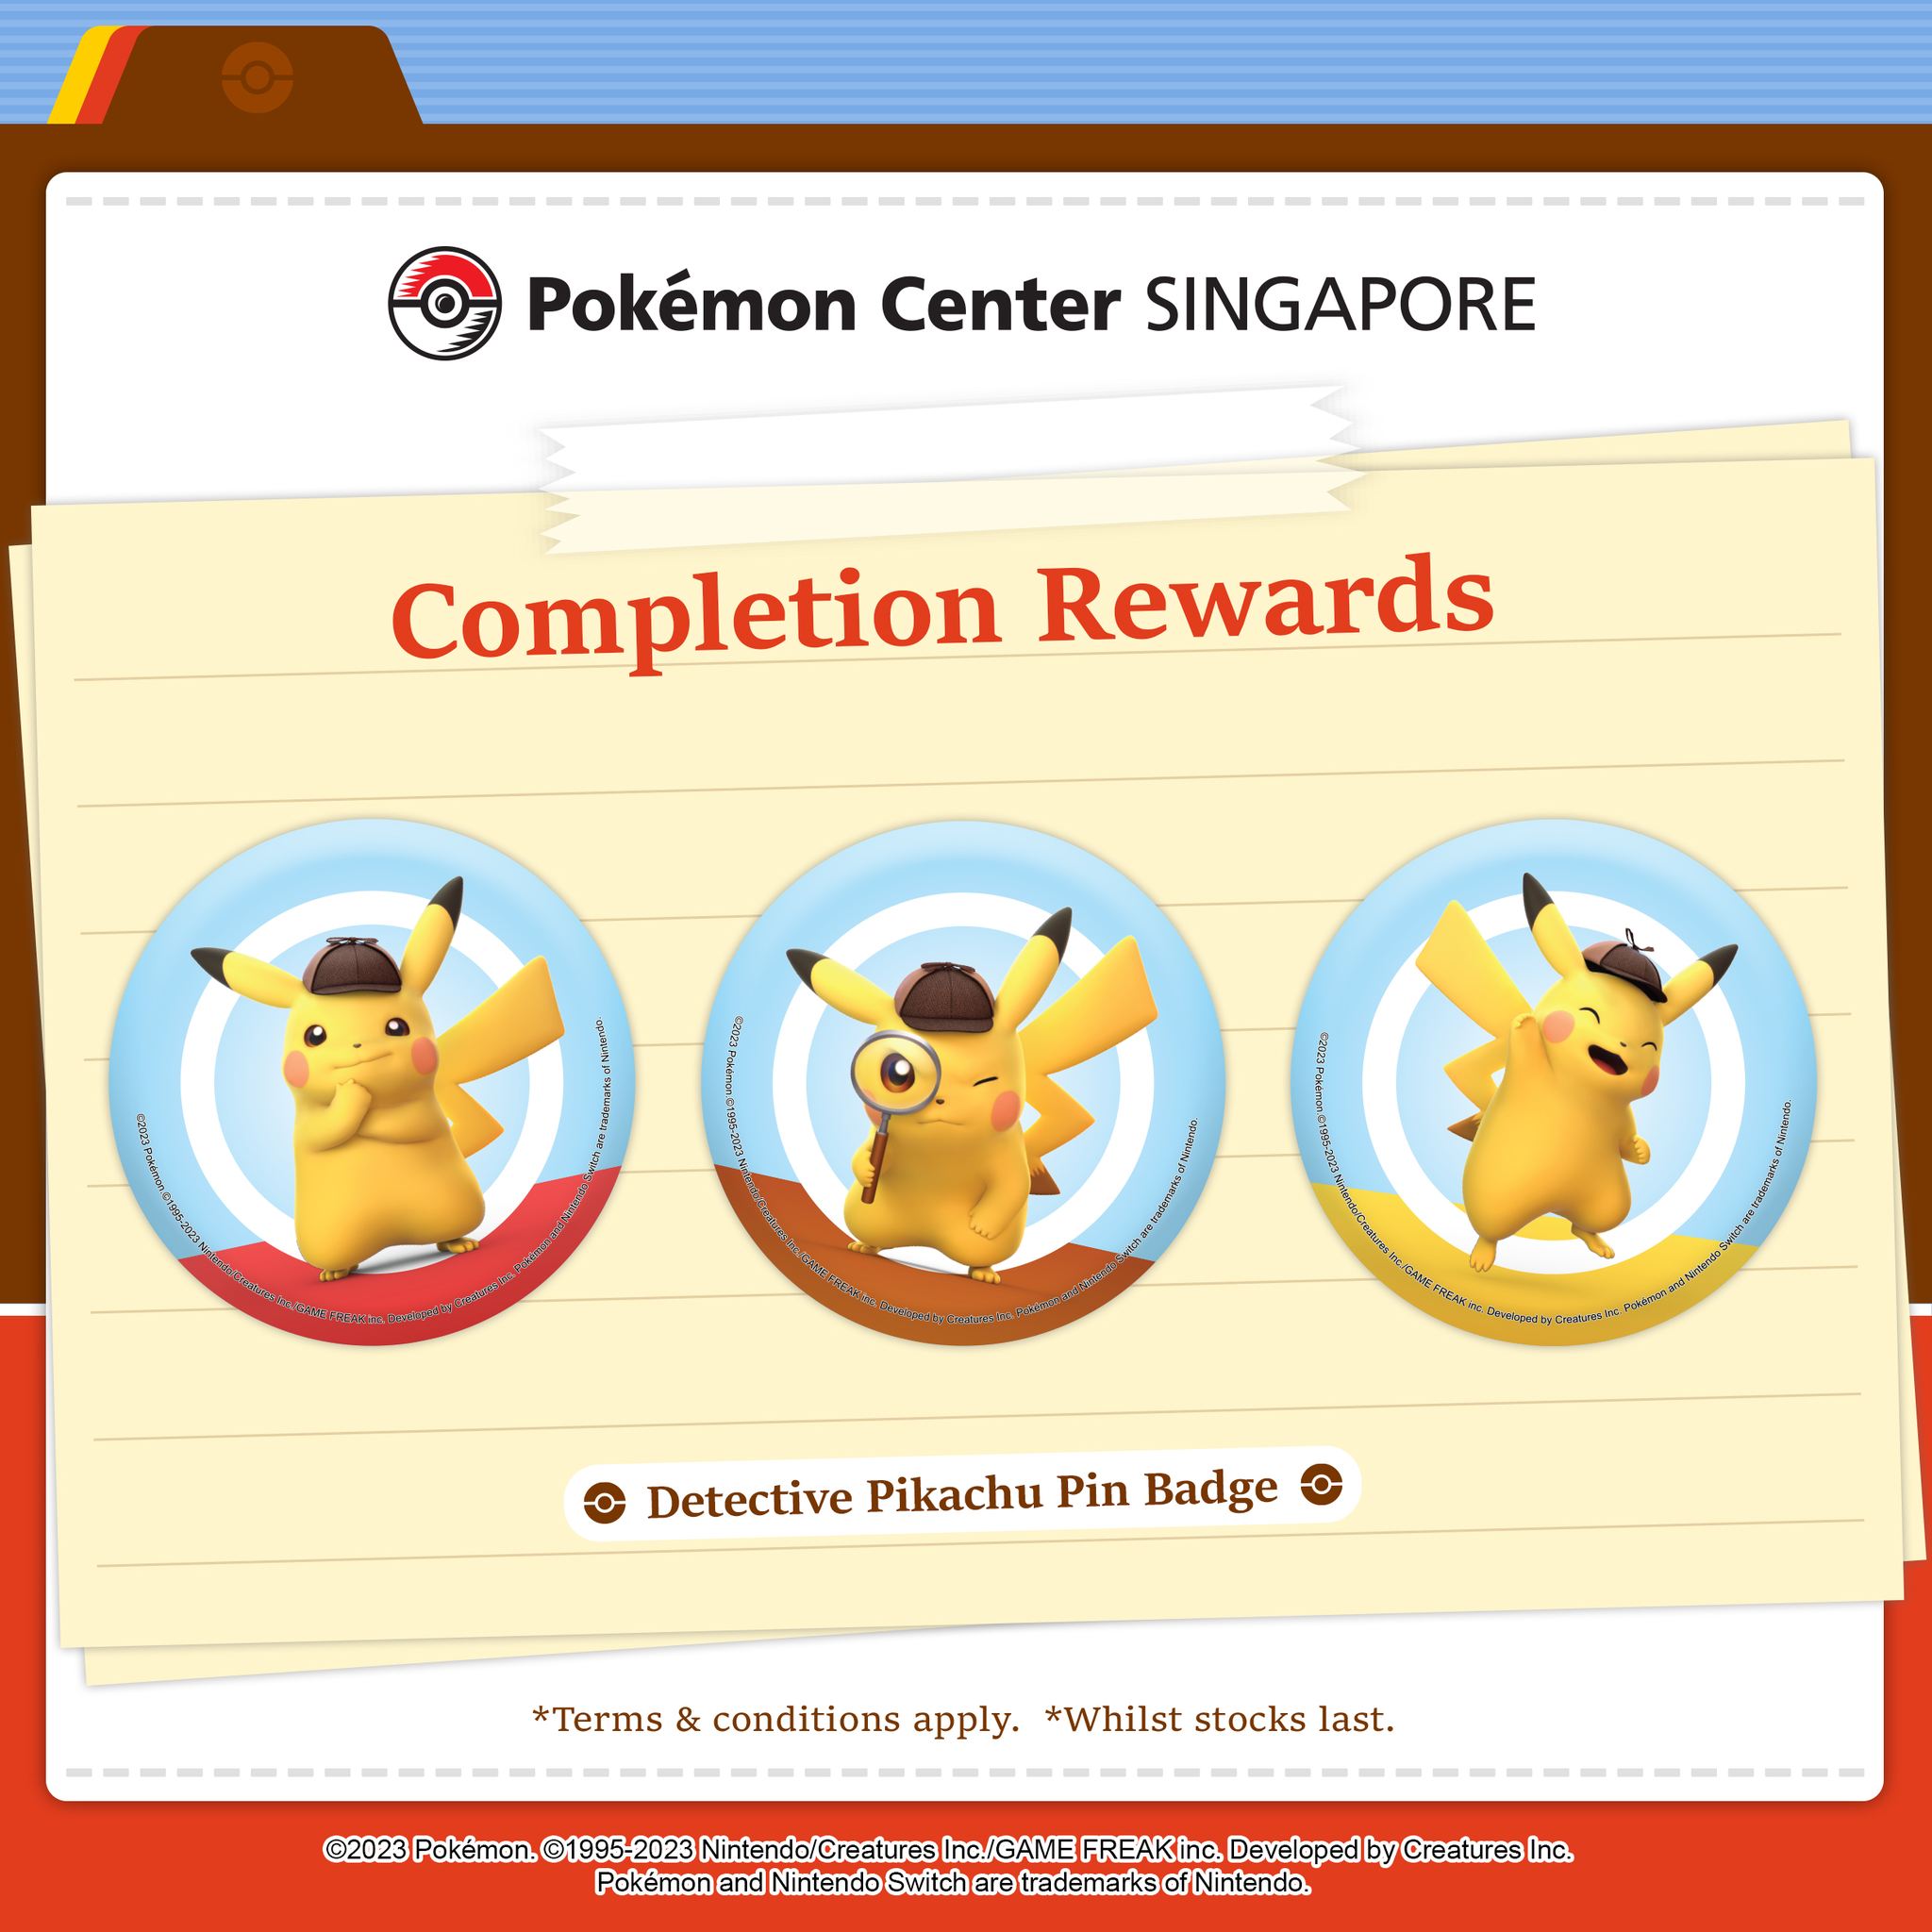 Pokemon Go: Detective Pikachu Event Details, Start Time, and Bonuses